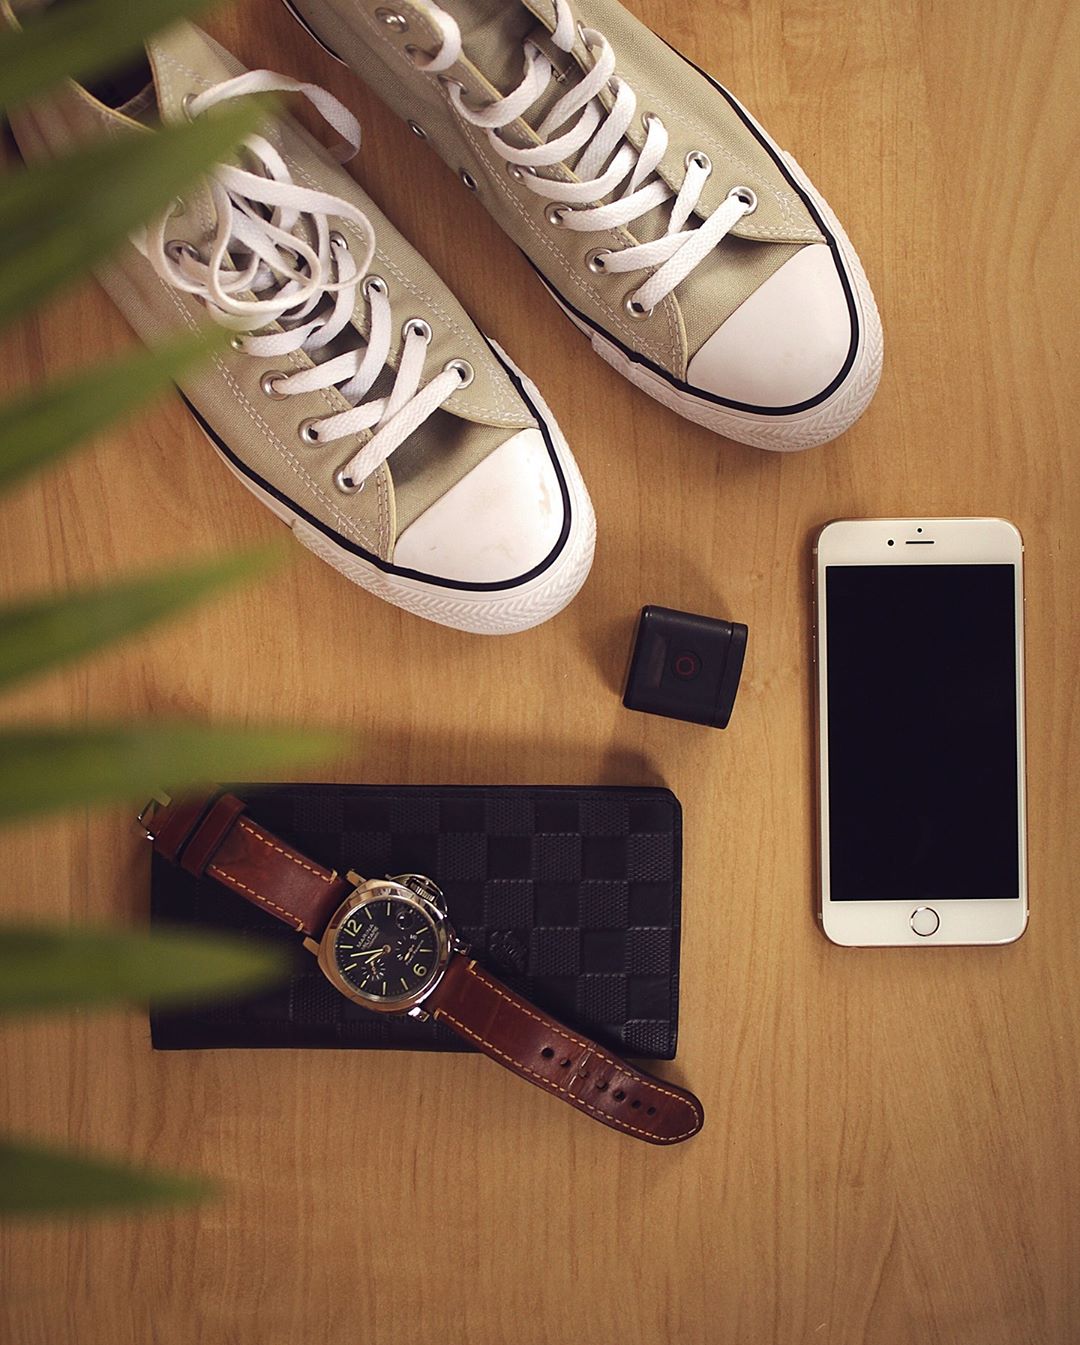 VipBrands - ساعة ⌚ تبرز فيها اناقتك، استكشف المزيد الرابط في البايو
تسوق#
Stands out your elegance with these⌚watches
#VipBrands #Watches #style #Fashion